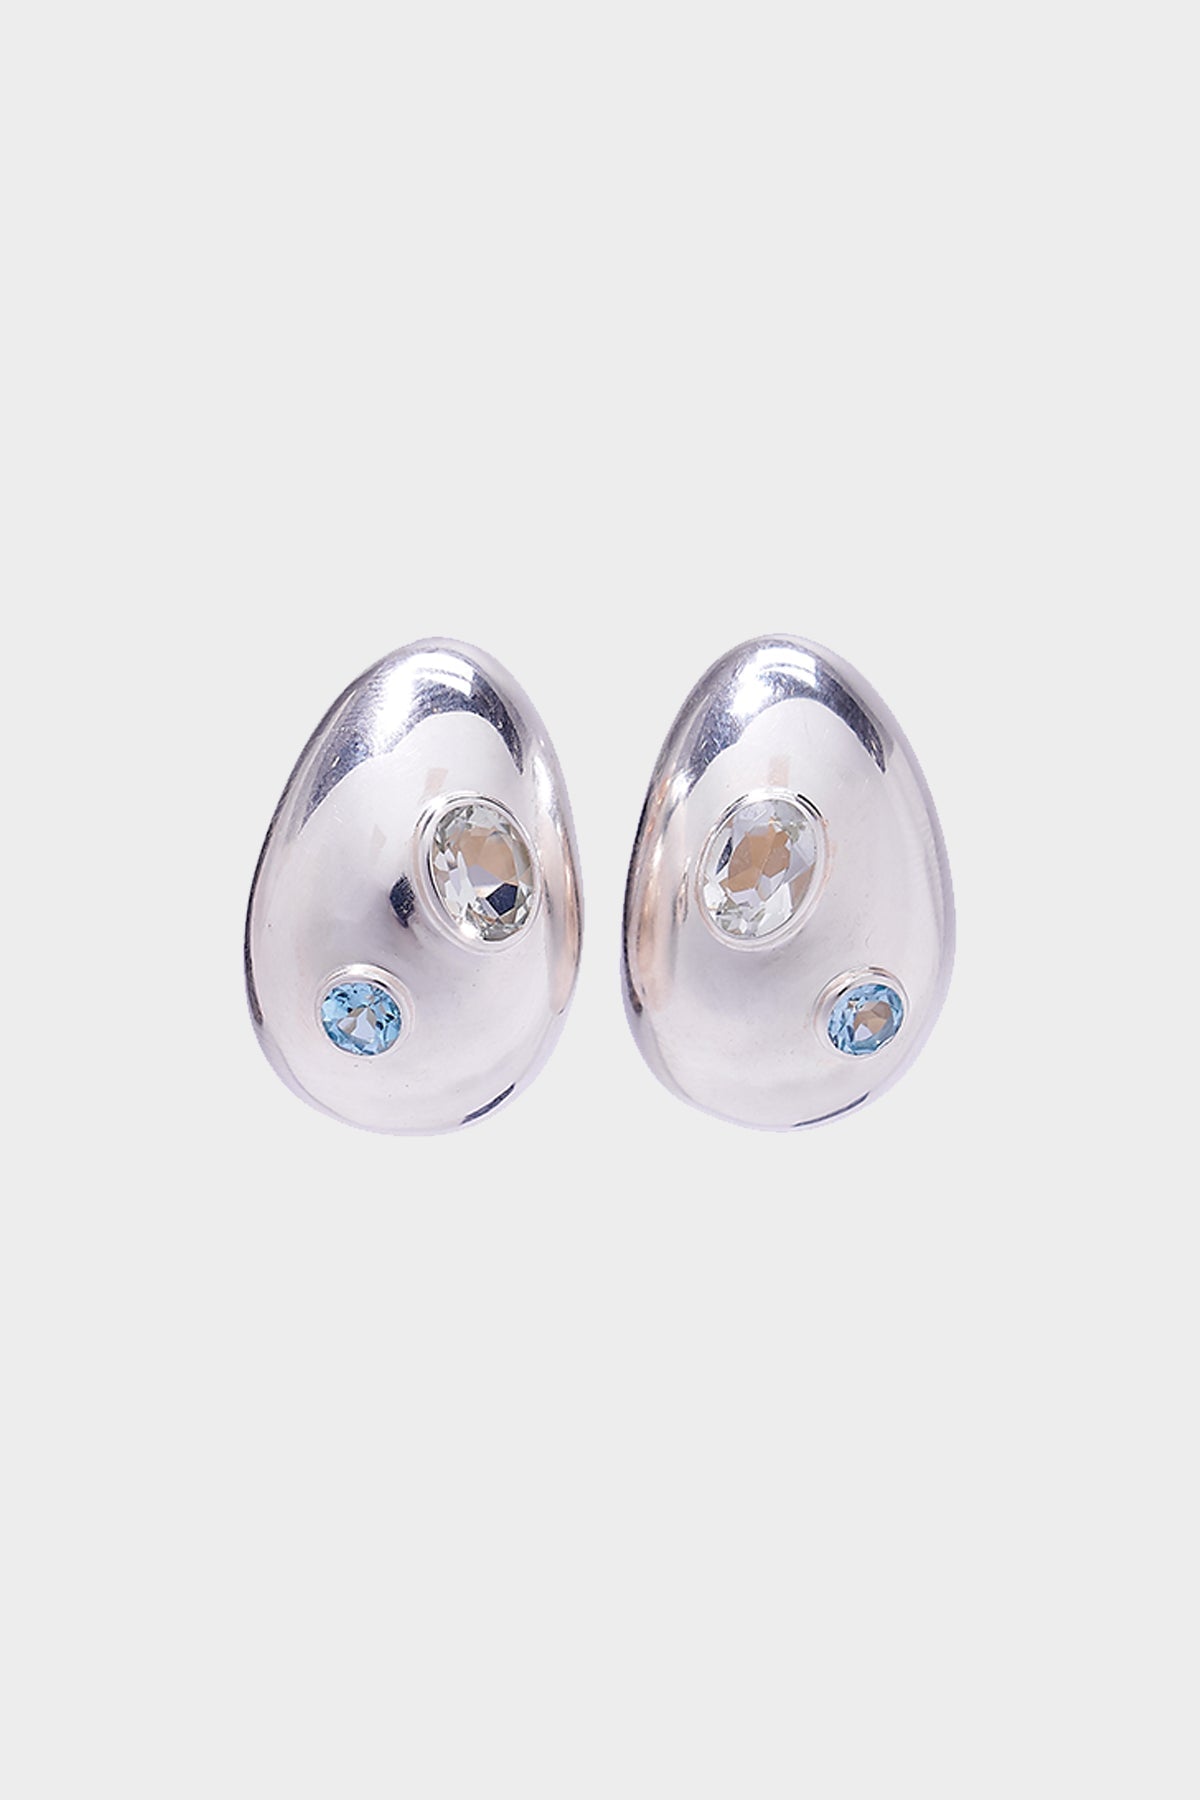 Mini Arp Earrings in Studded Silver - shop-olivia.com